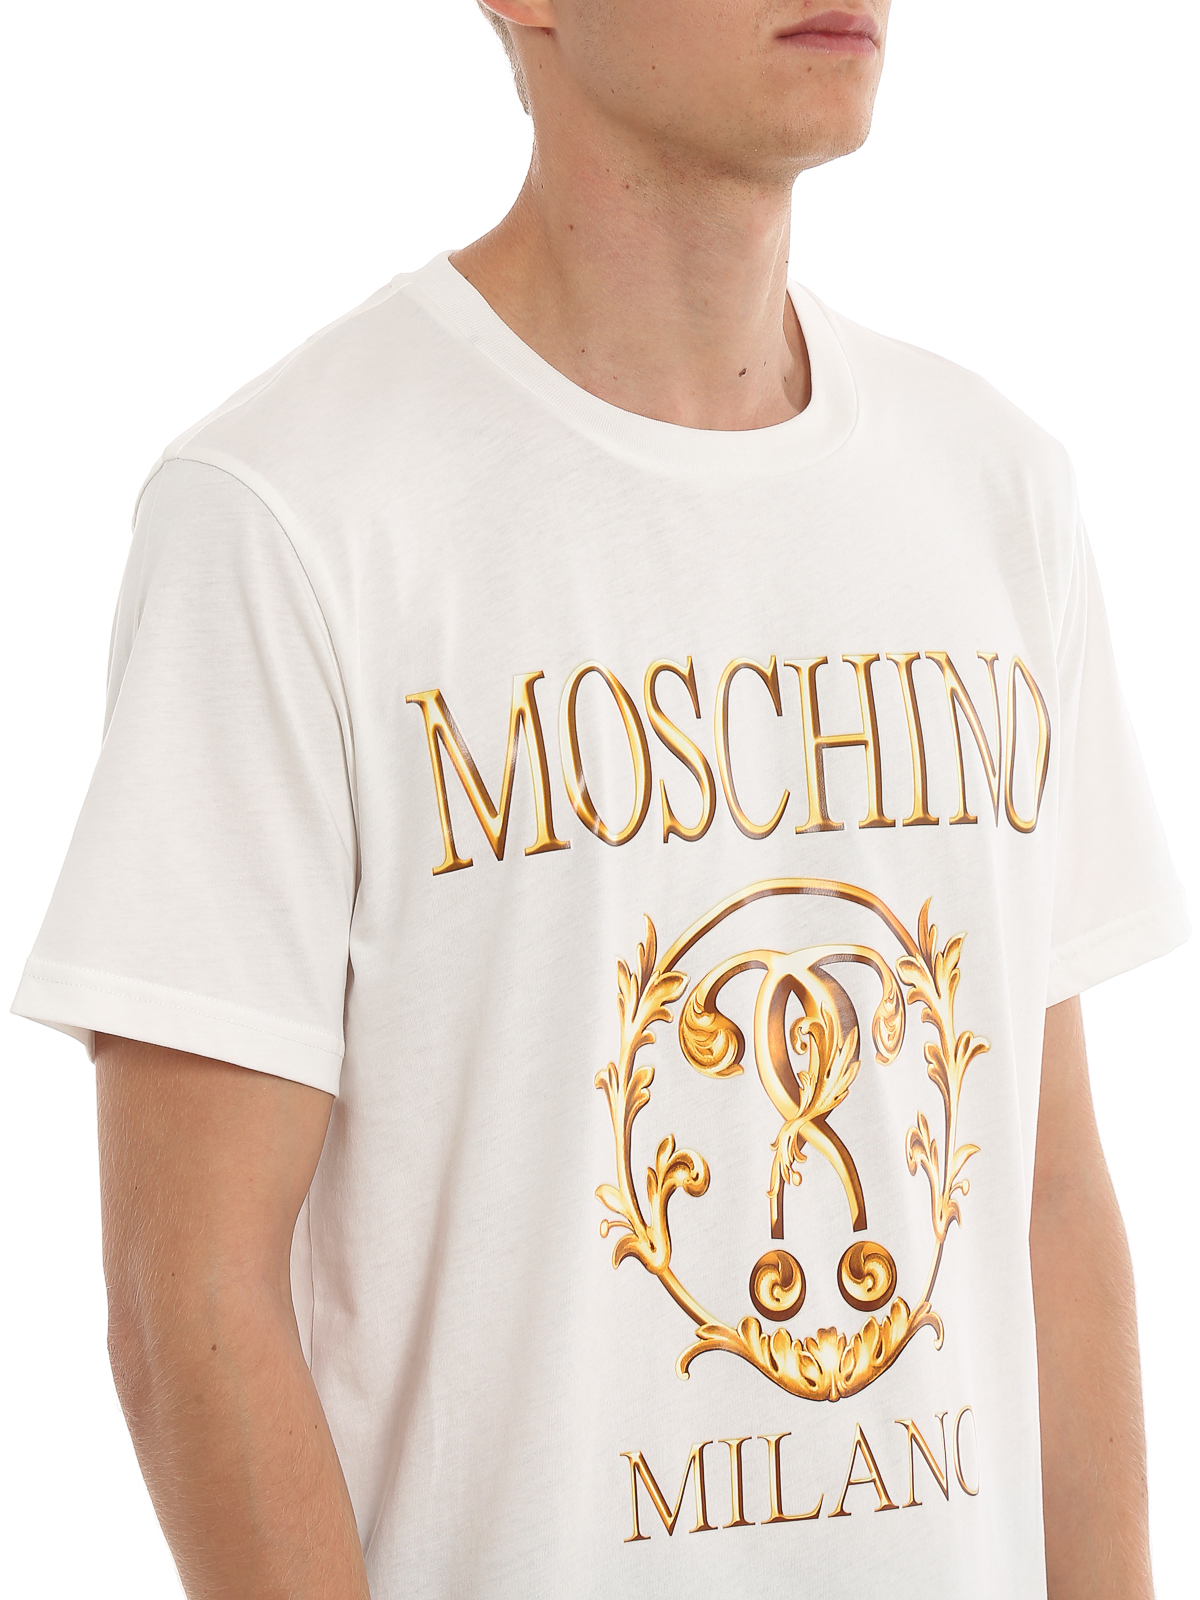 Moschino Baroque logo print Tee - 72052401002 iKRIX.com